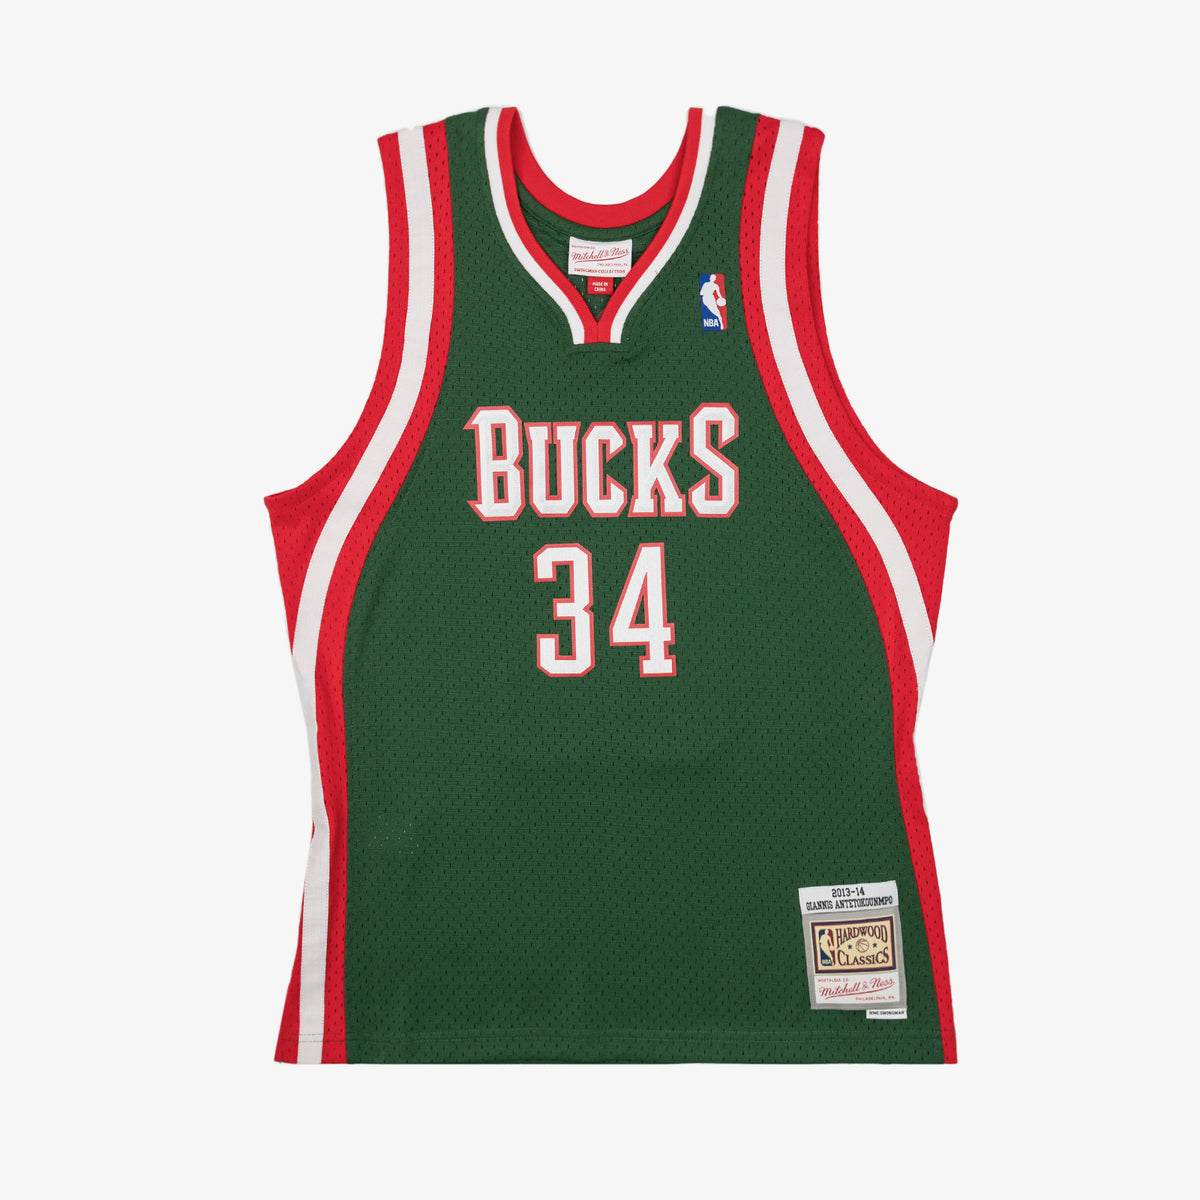 Milwaukee Bucks - The new Giannis Antetokounmpo jersey is